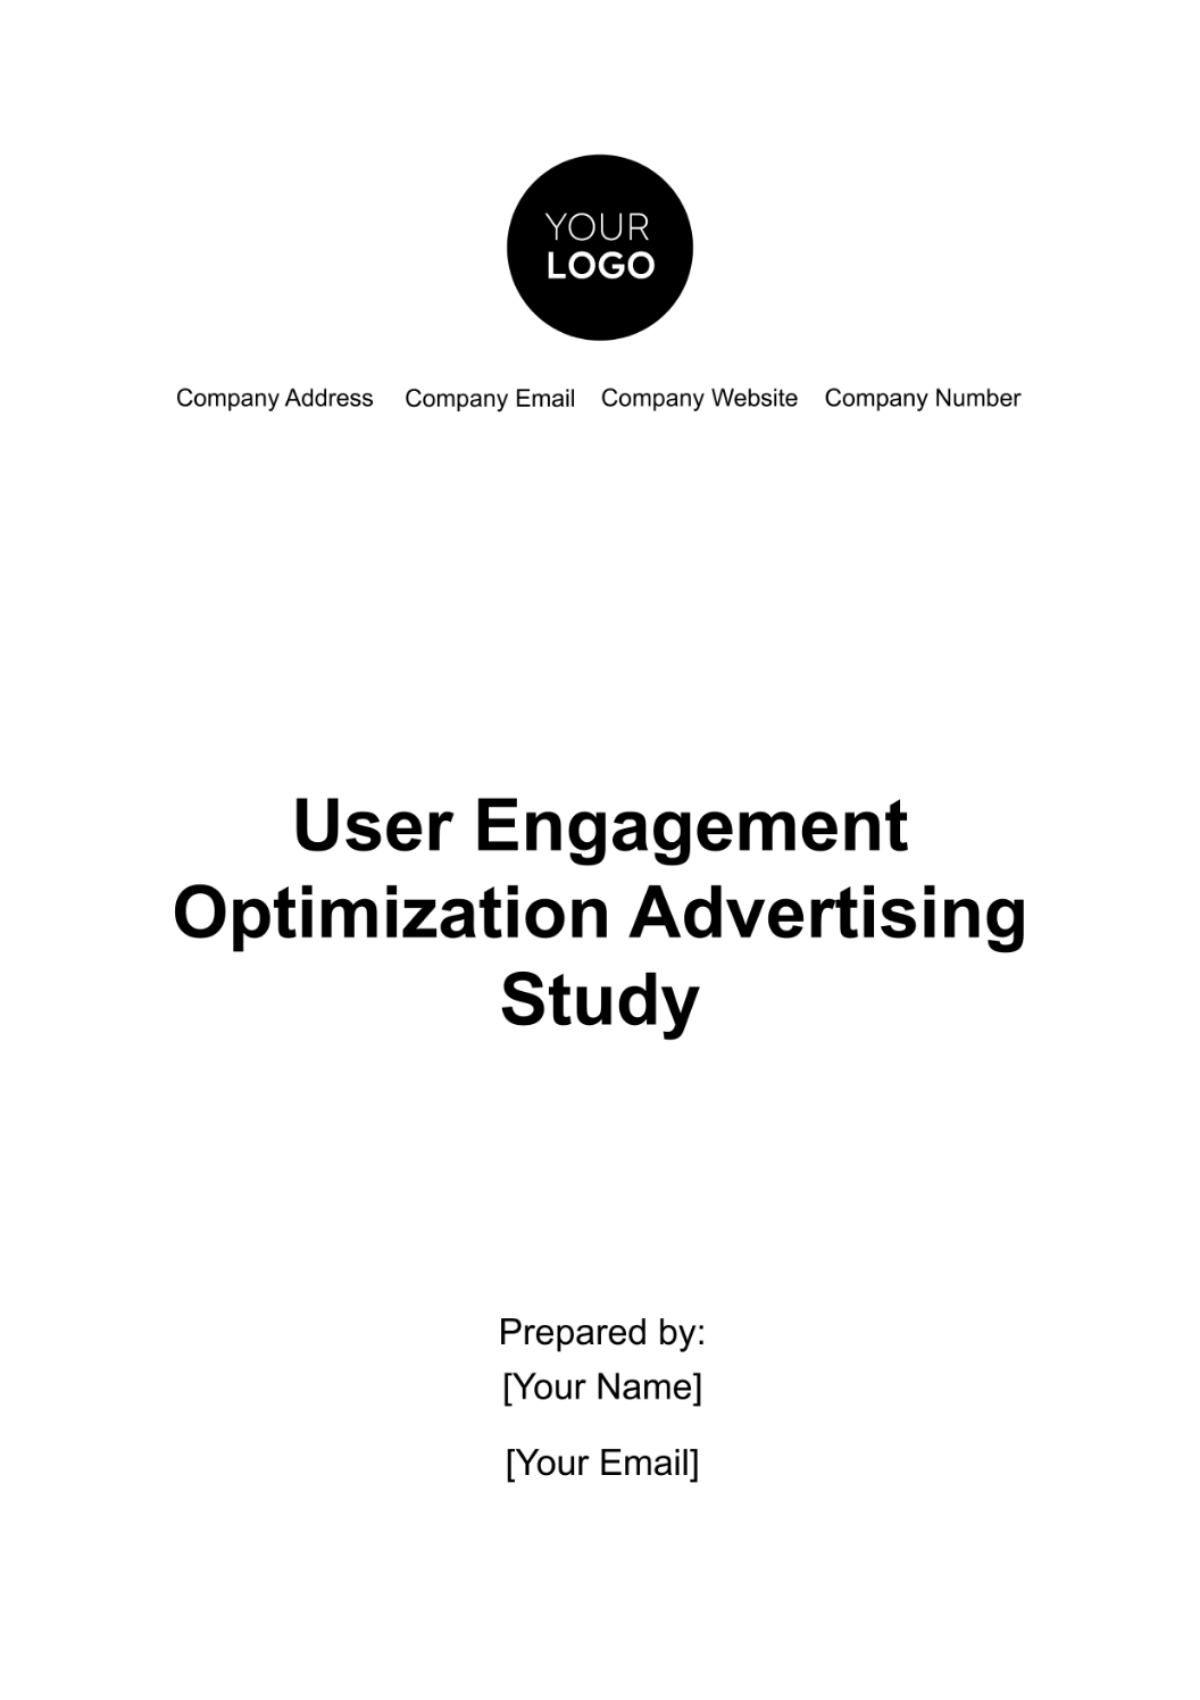 User Engagement Optimization Advertising Study Template